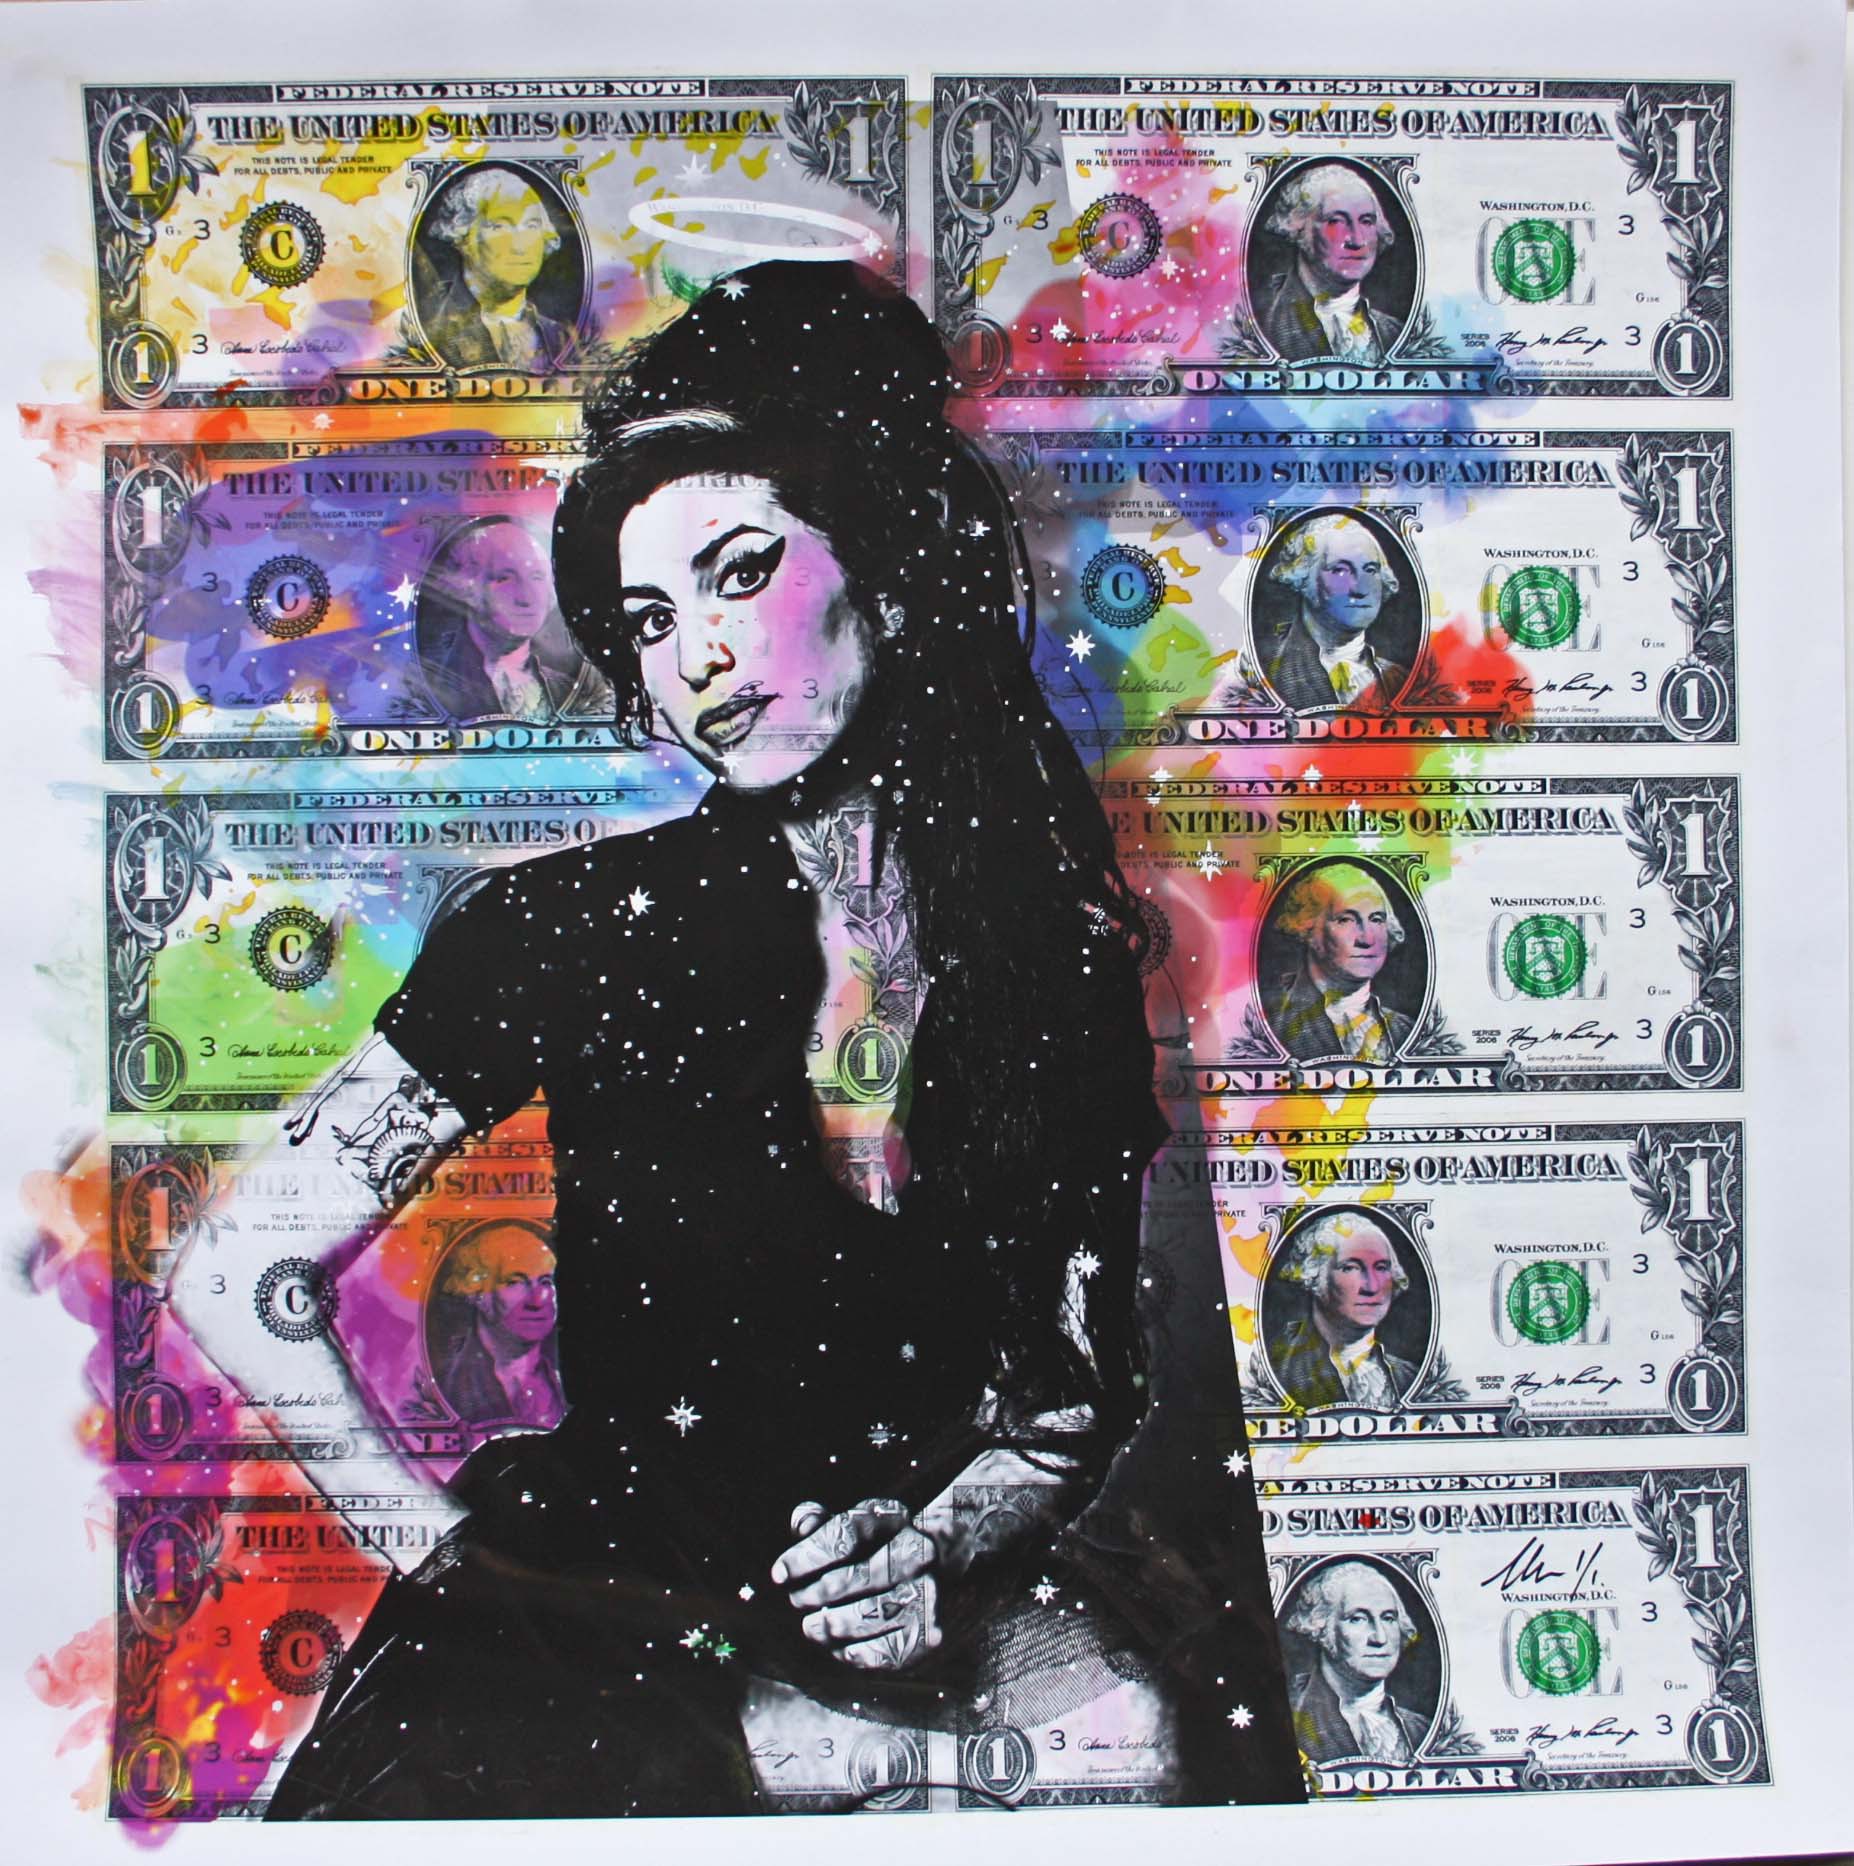 Amy Winehouse, Pop Art Quote Portrait, Ratio 4 5, inspirational quotes,  celebrities Weekender Tote Bag by BONB Creative - Pixels Merch